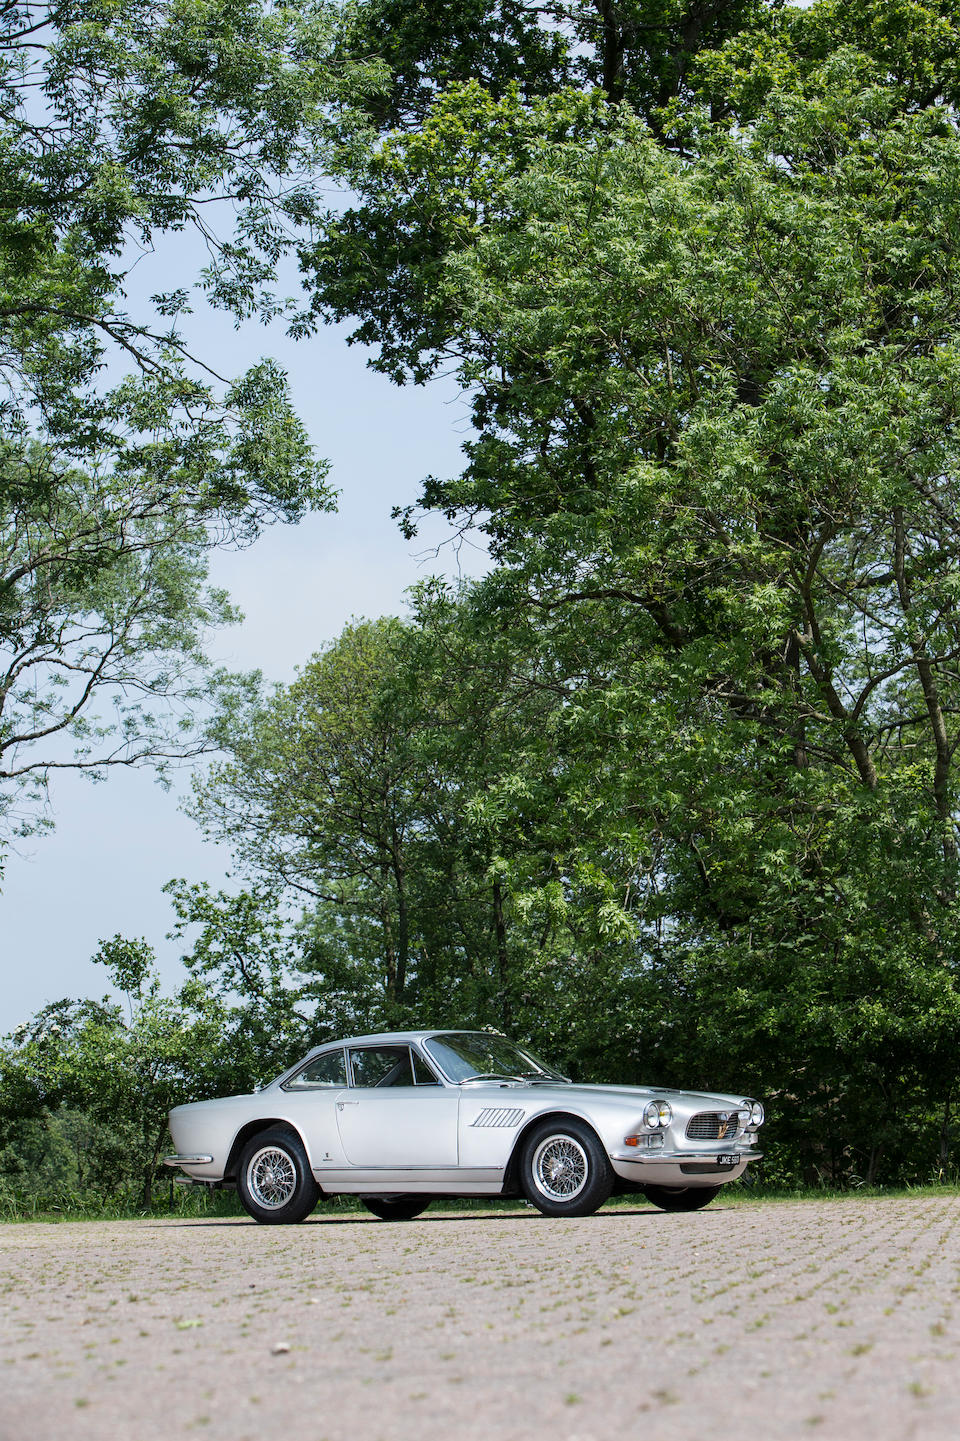 Bonhams : 1966 Maserati Sebring 'Series II' 3700 Coupé Chassis no. AM101/2/10 425 Engine no. 425